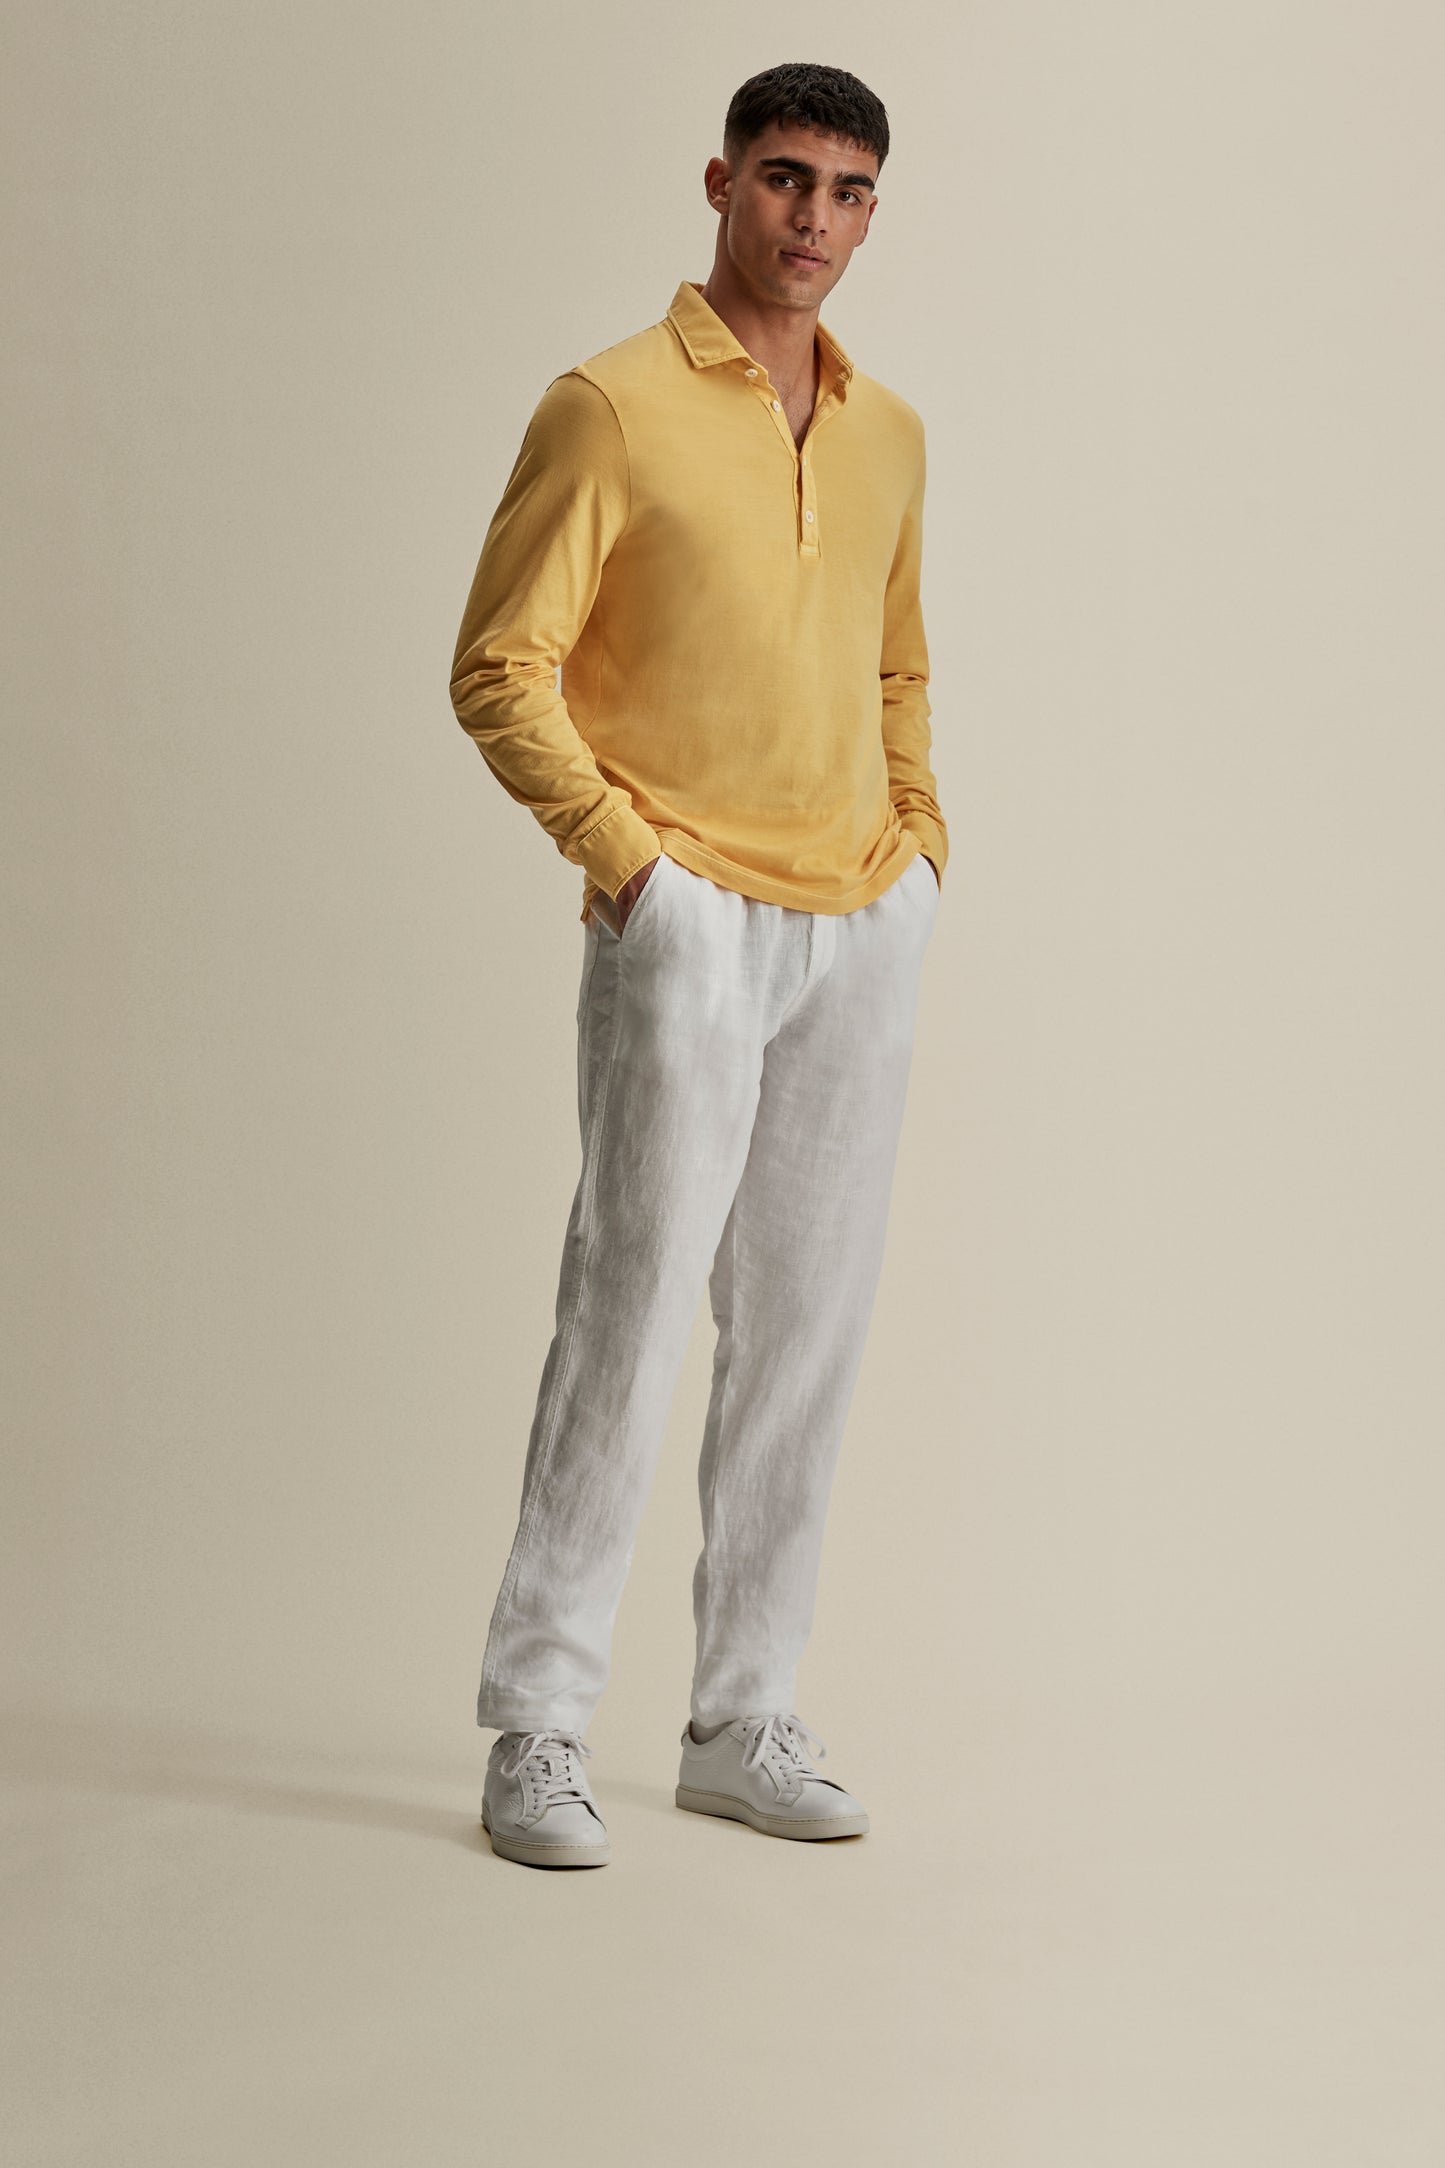 Cotton Long Sleeve Polo Shirt Canary Yellow Full Length Model Image